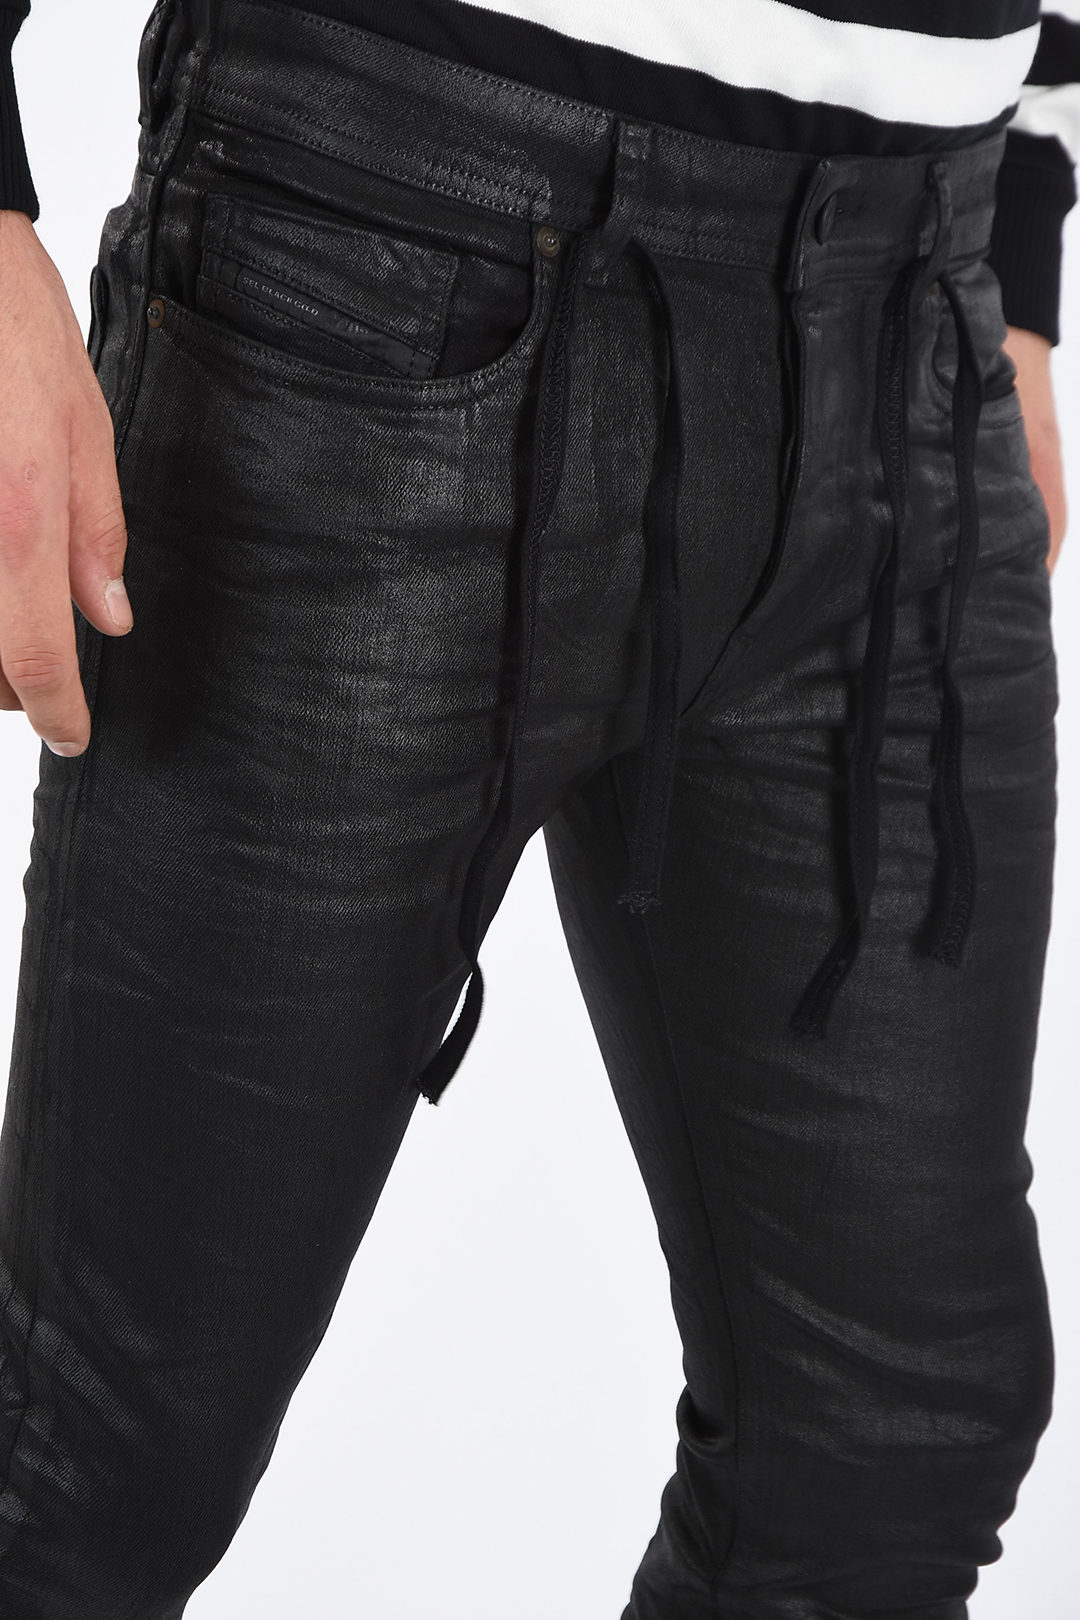 LAFAYETTE 148 Mercer Black Waxed Denim Slim Leg Jeans Size 12 MSRP$398 EUC  | eBay